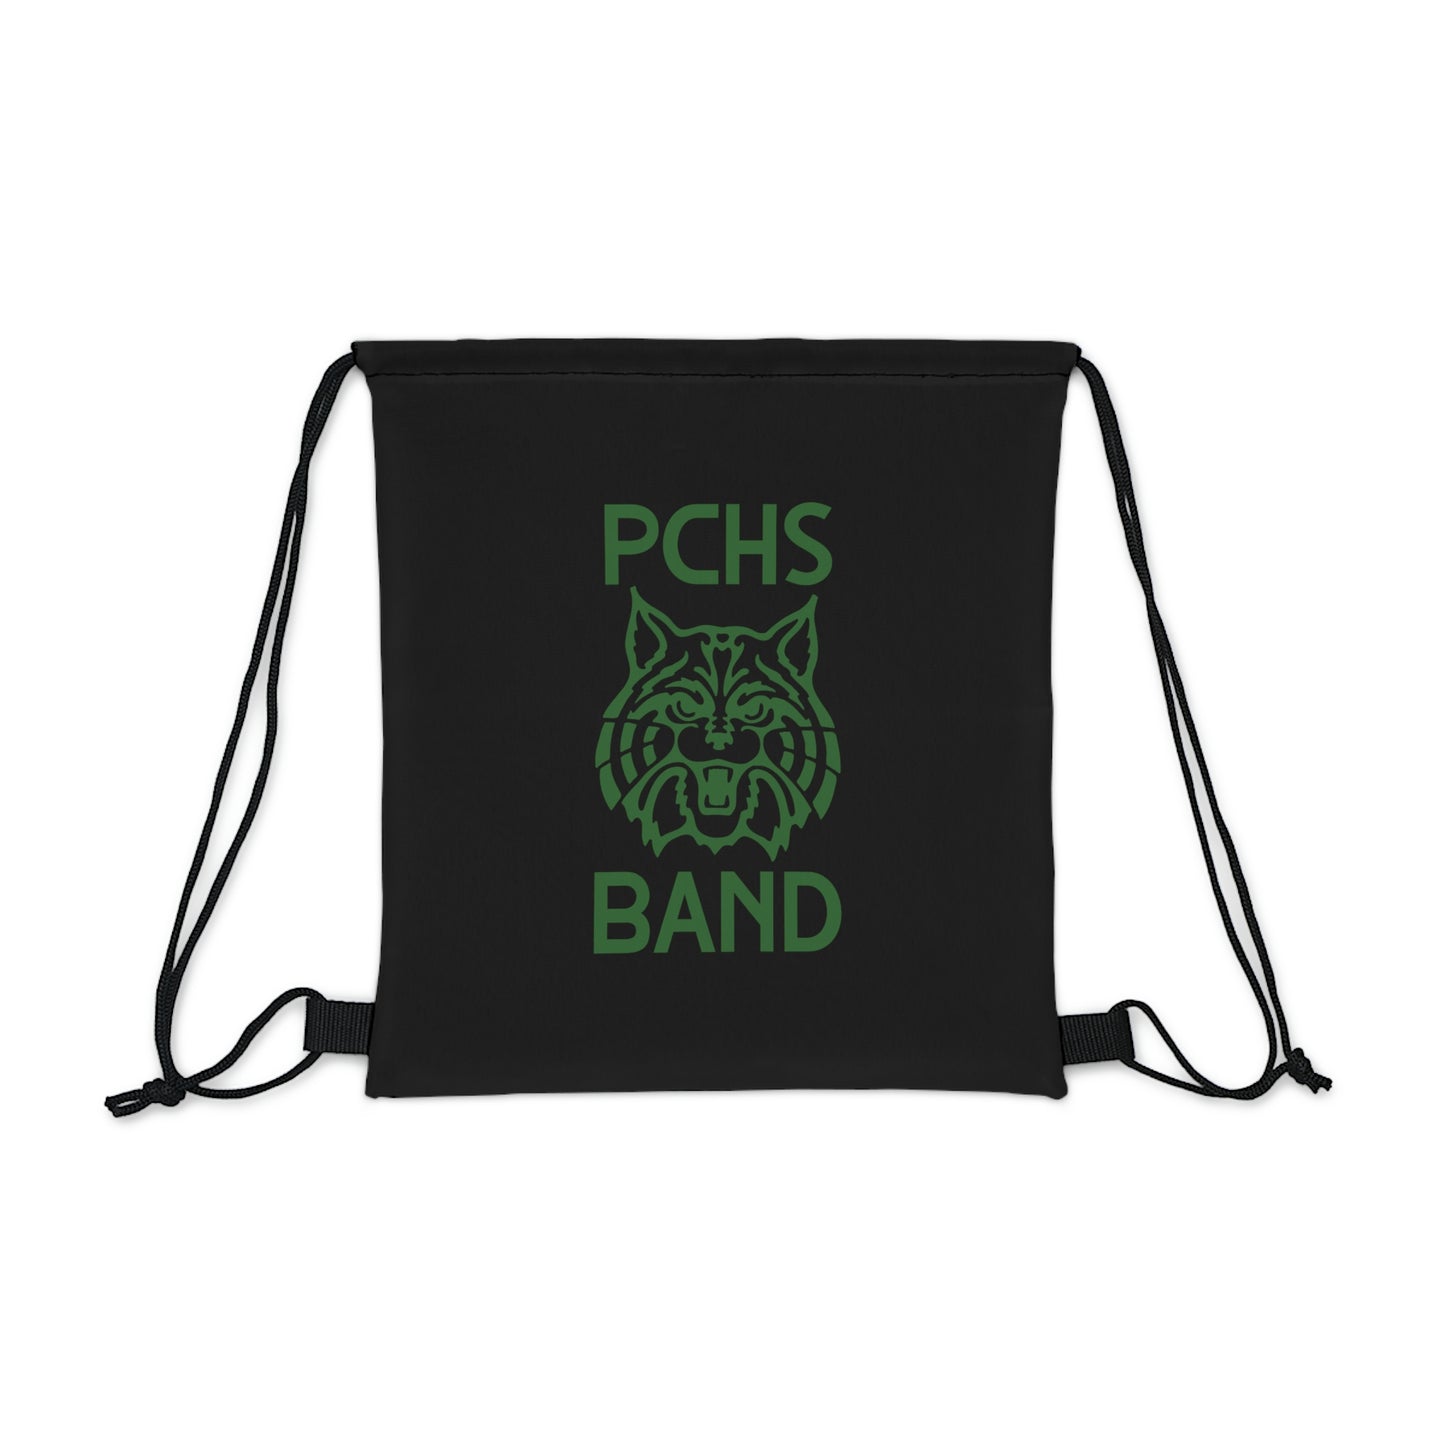 Plainfield Wildcat Band Drawstring Bag